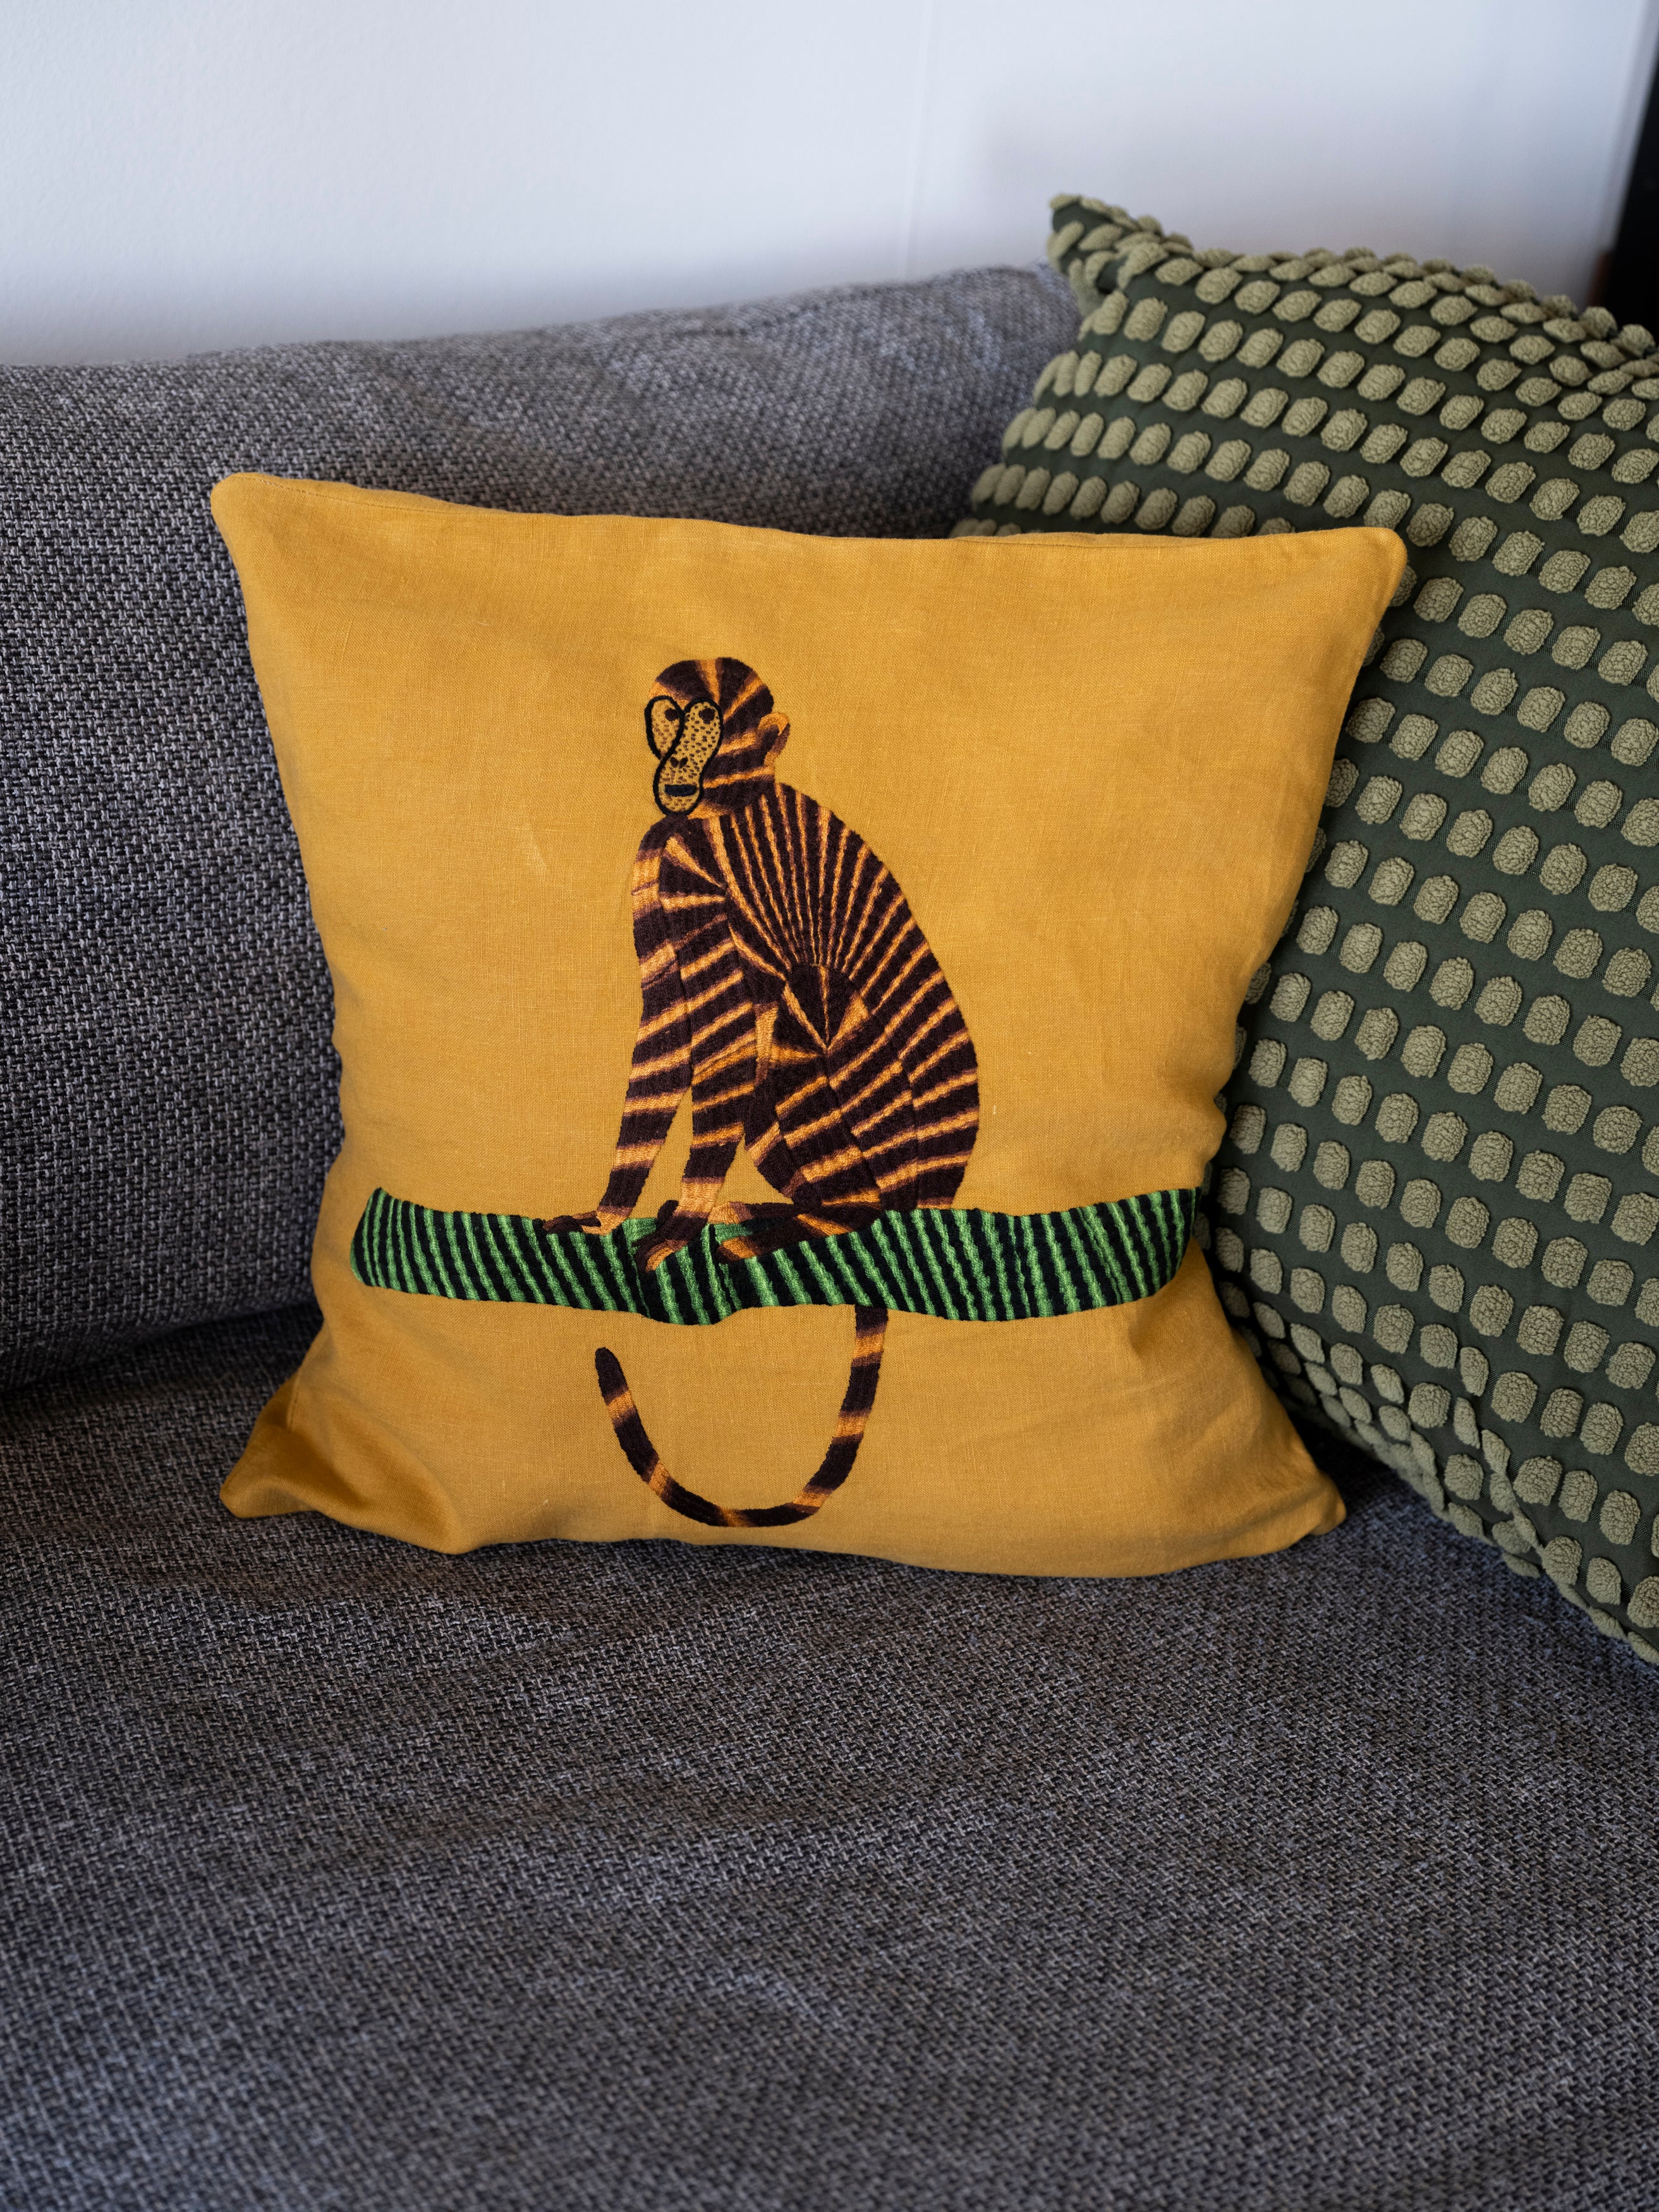 Monkey pillow on yellow linen